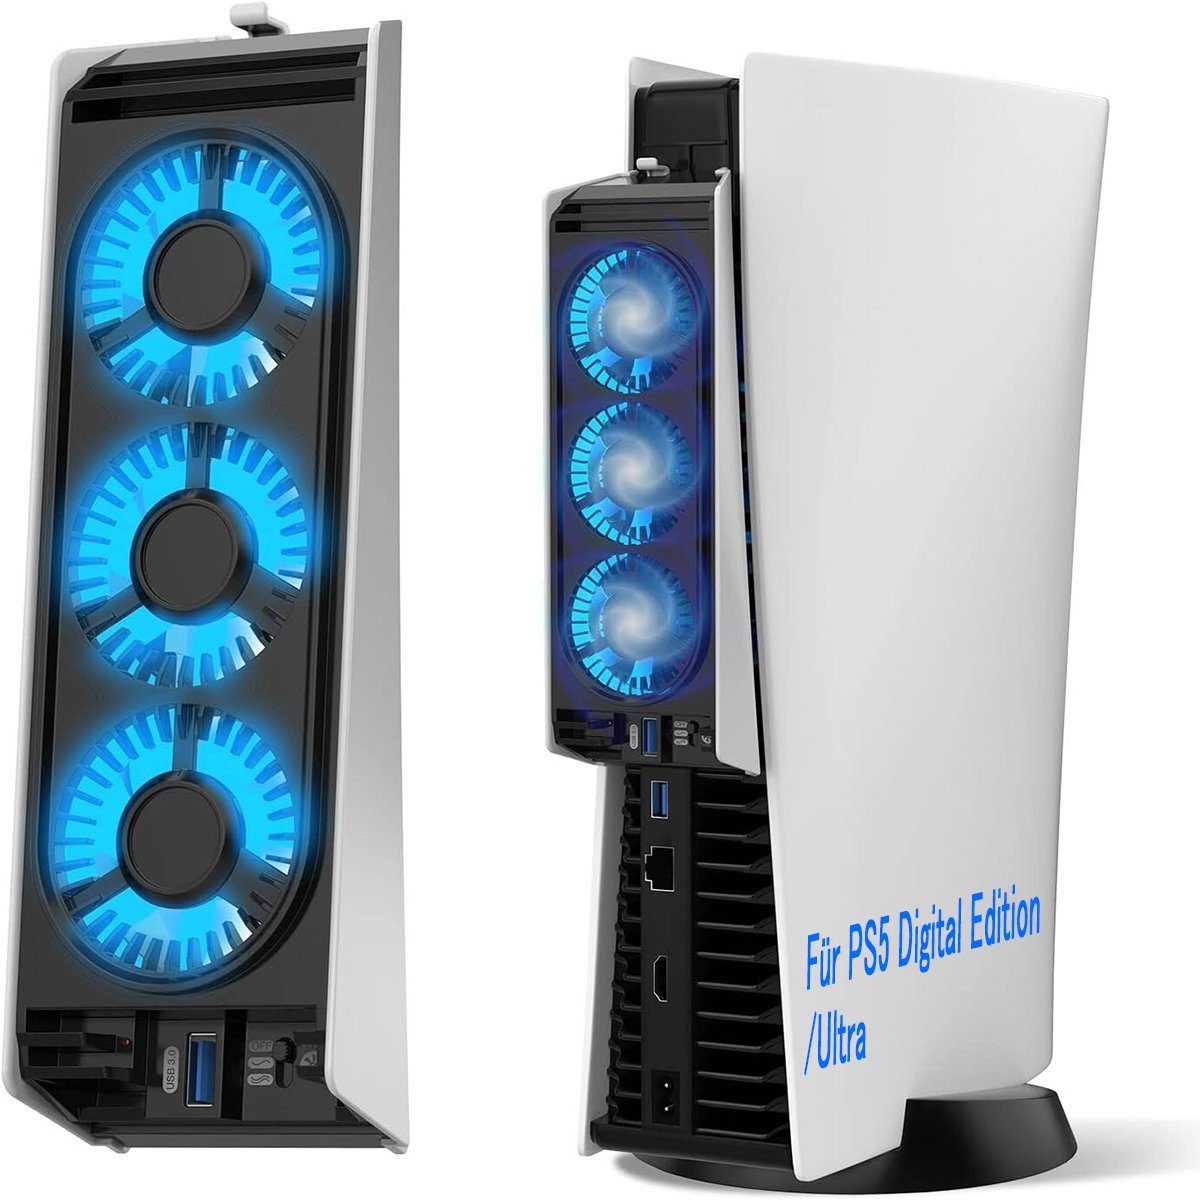 Haiaveng Gehäuselüfter PS5 Lüfter mit LED-Licht, verbesserter leiser Lüfter mit 3 Lüftern, PS5 Zubehör, PS5 Lüfter mit 2 Windgeschwindigkeiten, PS5 Lüfter Kühler